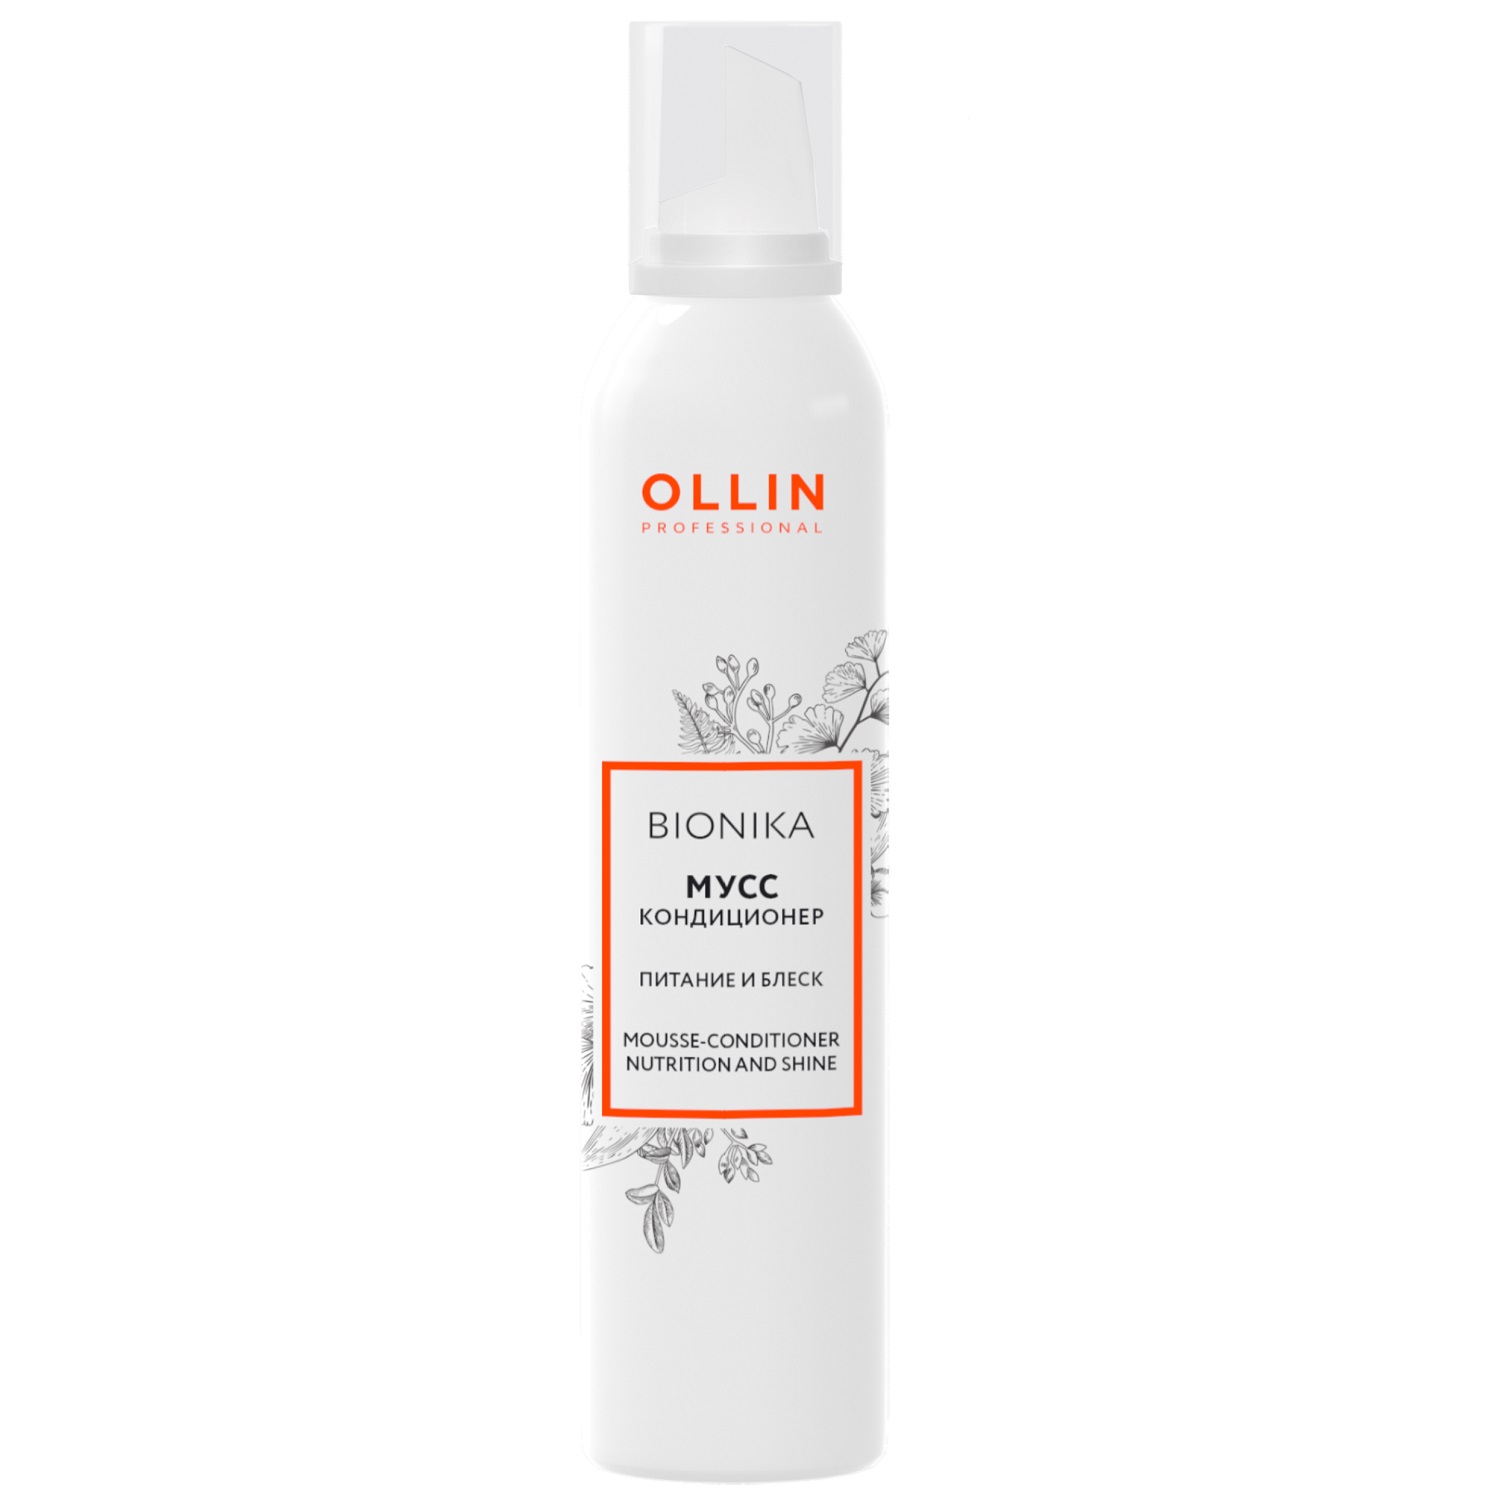 Ollin Professional Мусс-кондиционер для волос «Питание и блеск», 250 мл (Ollin Professional, BioNika) цена и фото